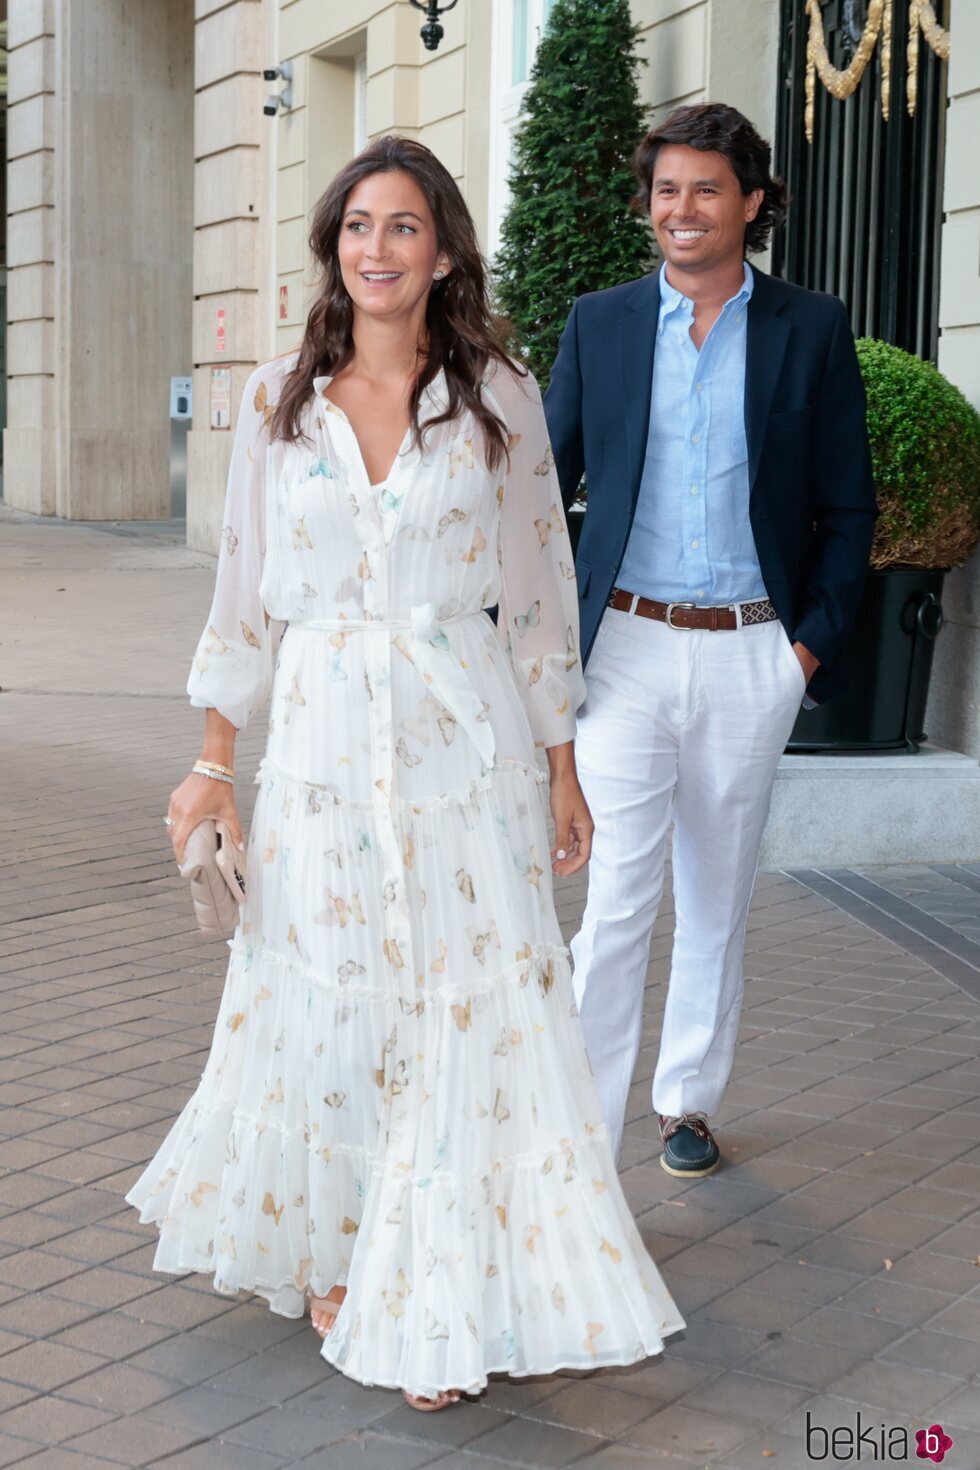 Álvaro Castillejo y Cristina Fernández en la fiesta preboda de Tamara Falcó e Íñigo Onieva